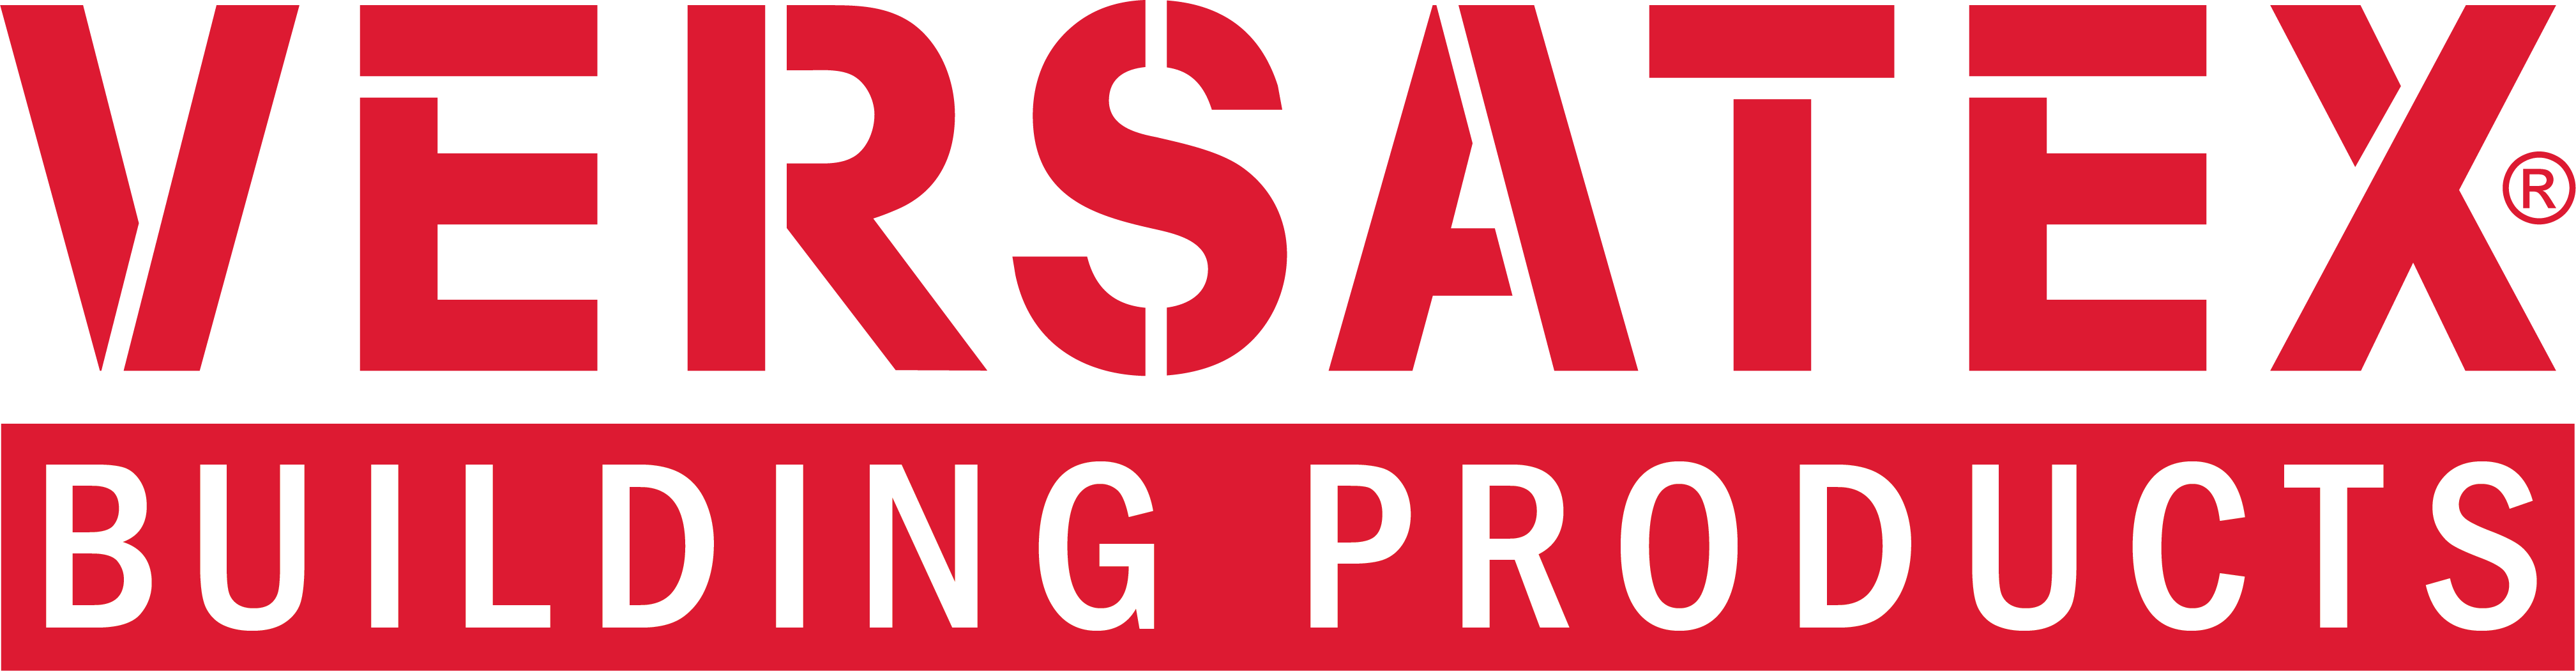 VERSATEX-Building-Products-logo